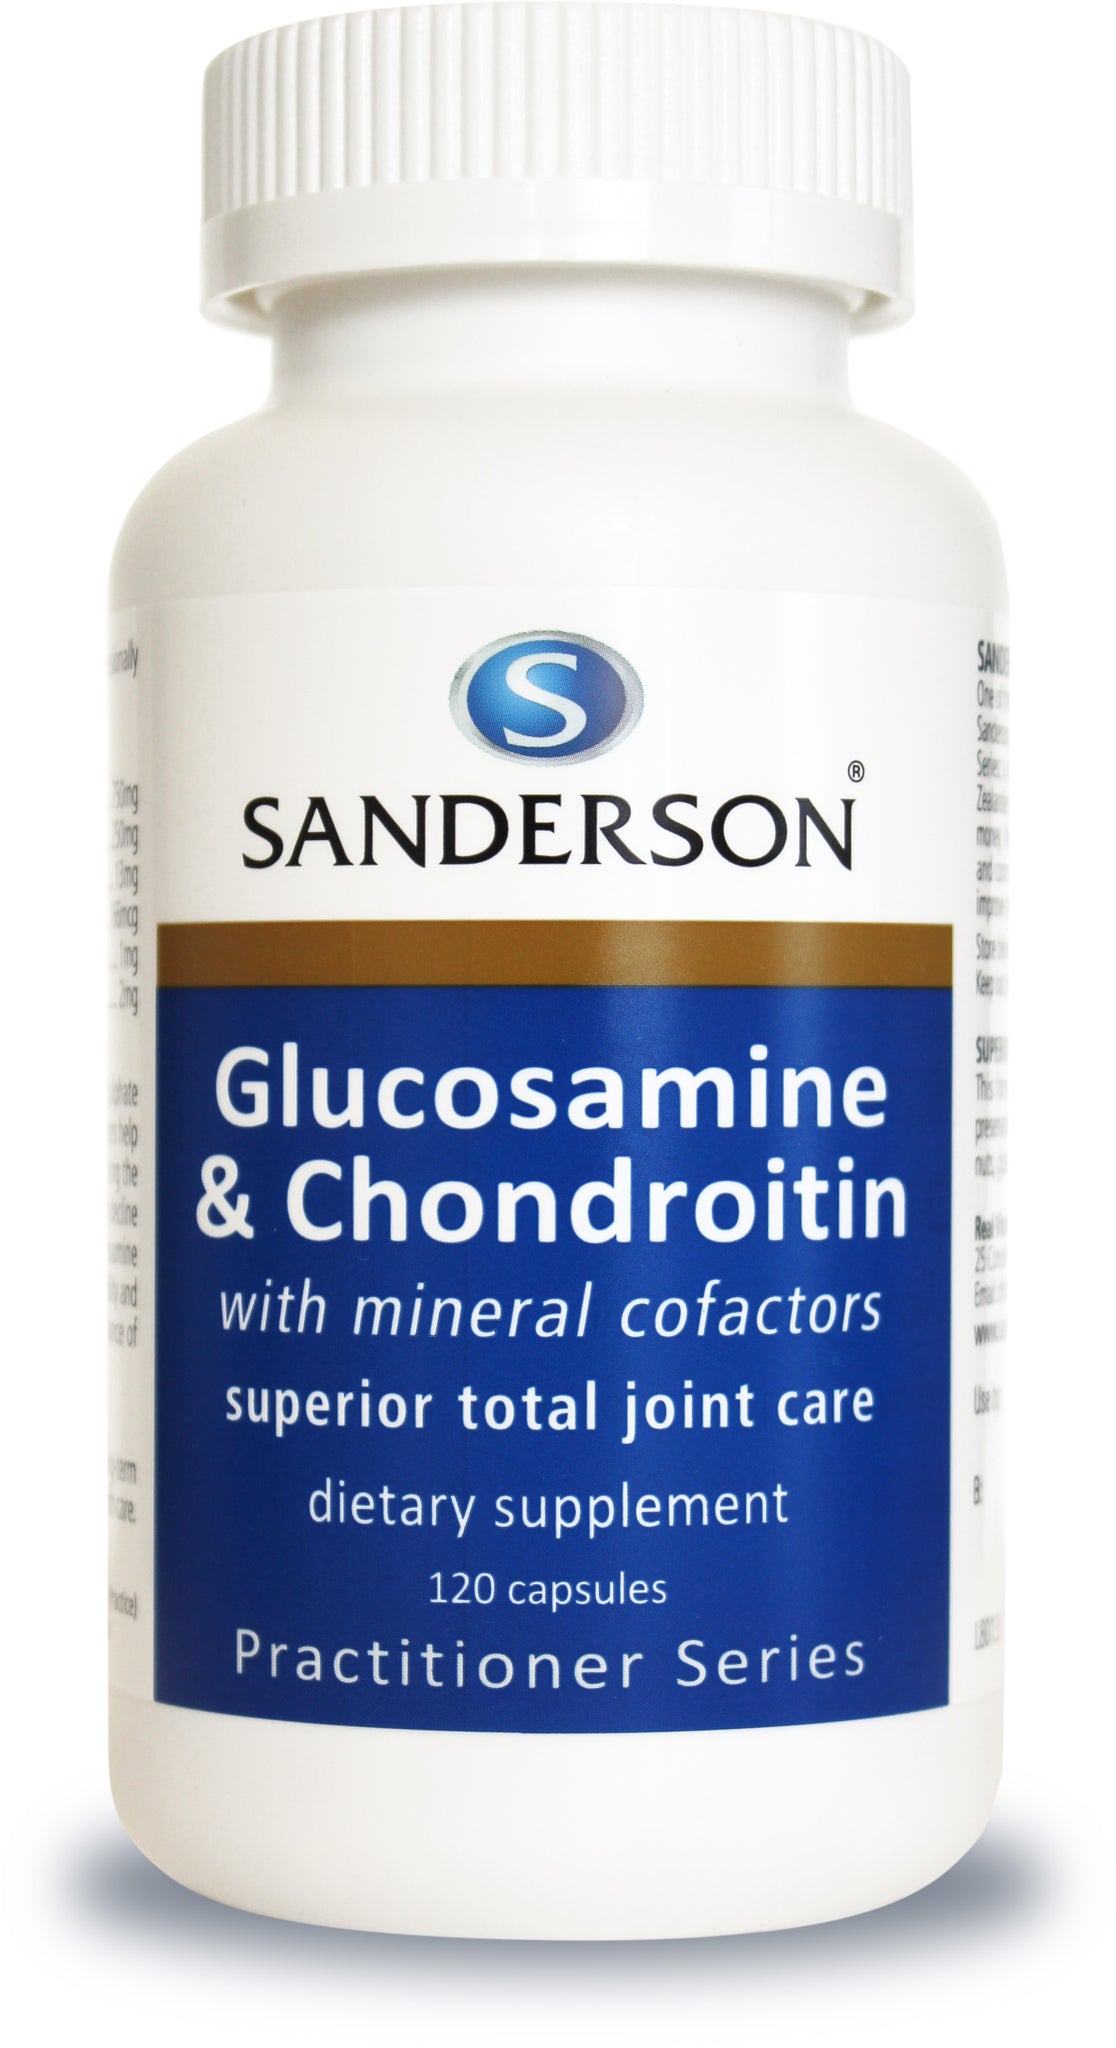 Sanderson Glucosamine & Chondroitin Capsules